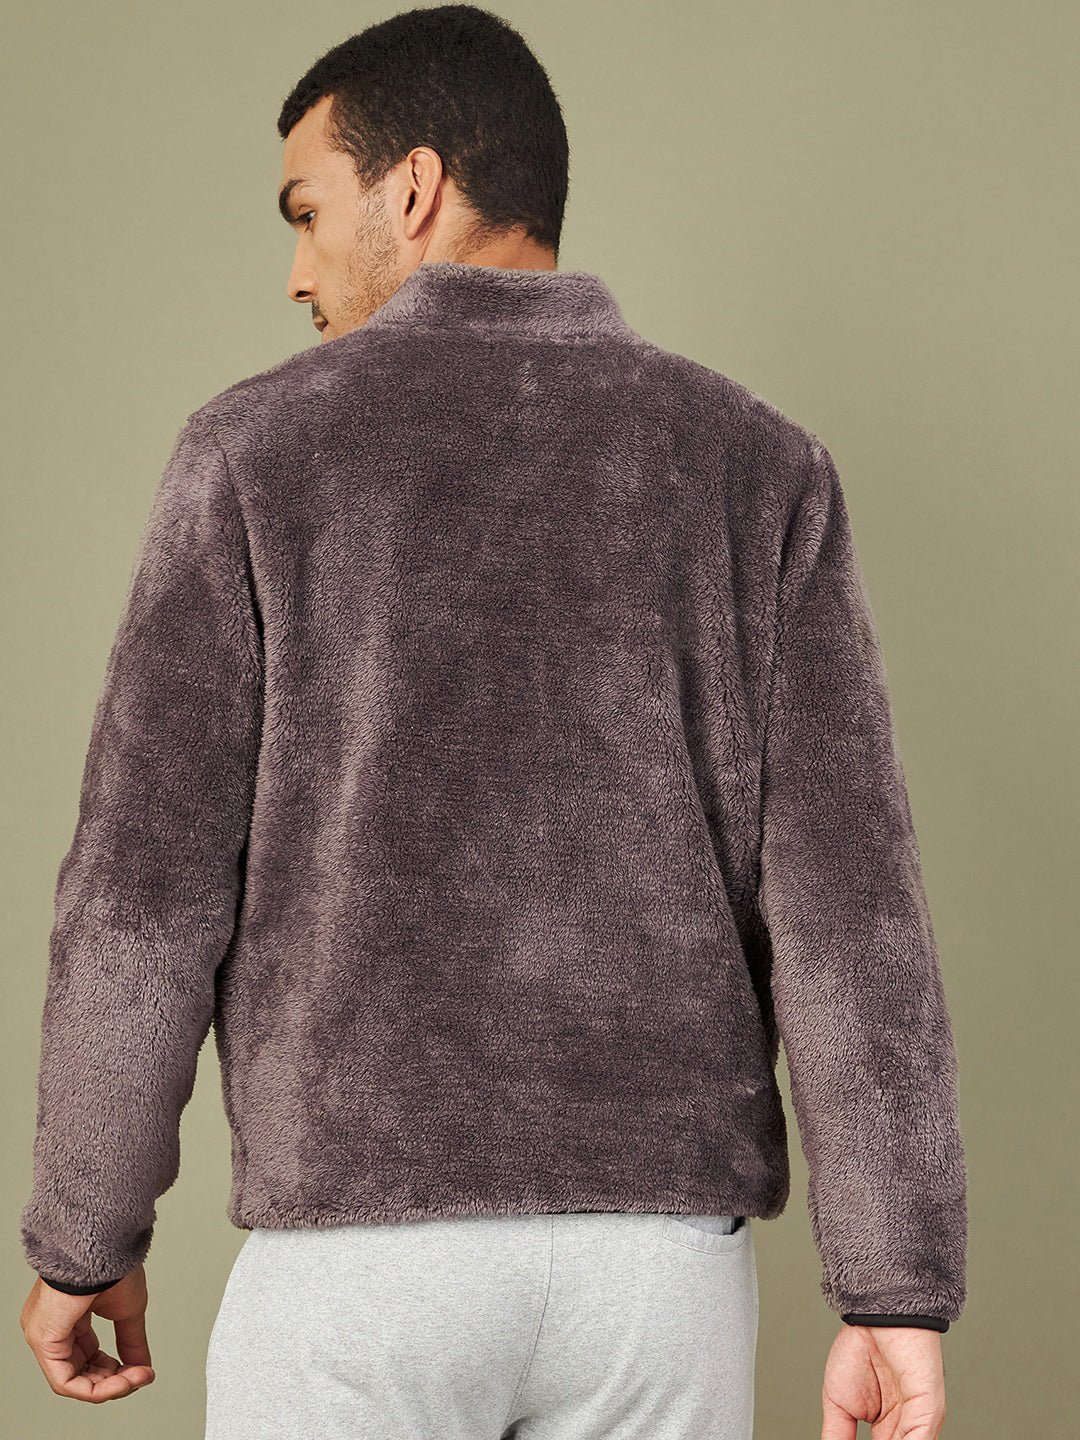 Men's Charcoal Grey Fur Contrast Zipper Jacket - LYUSH-MASCLN